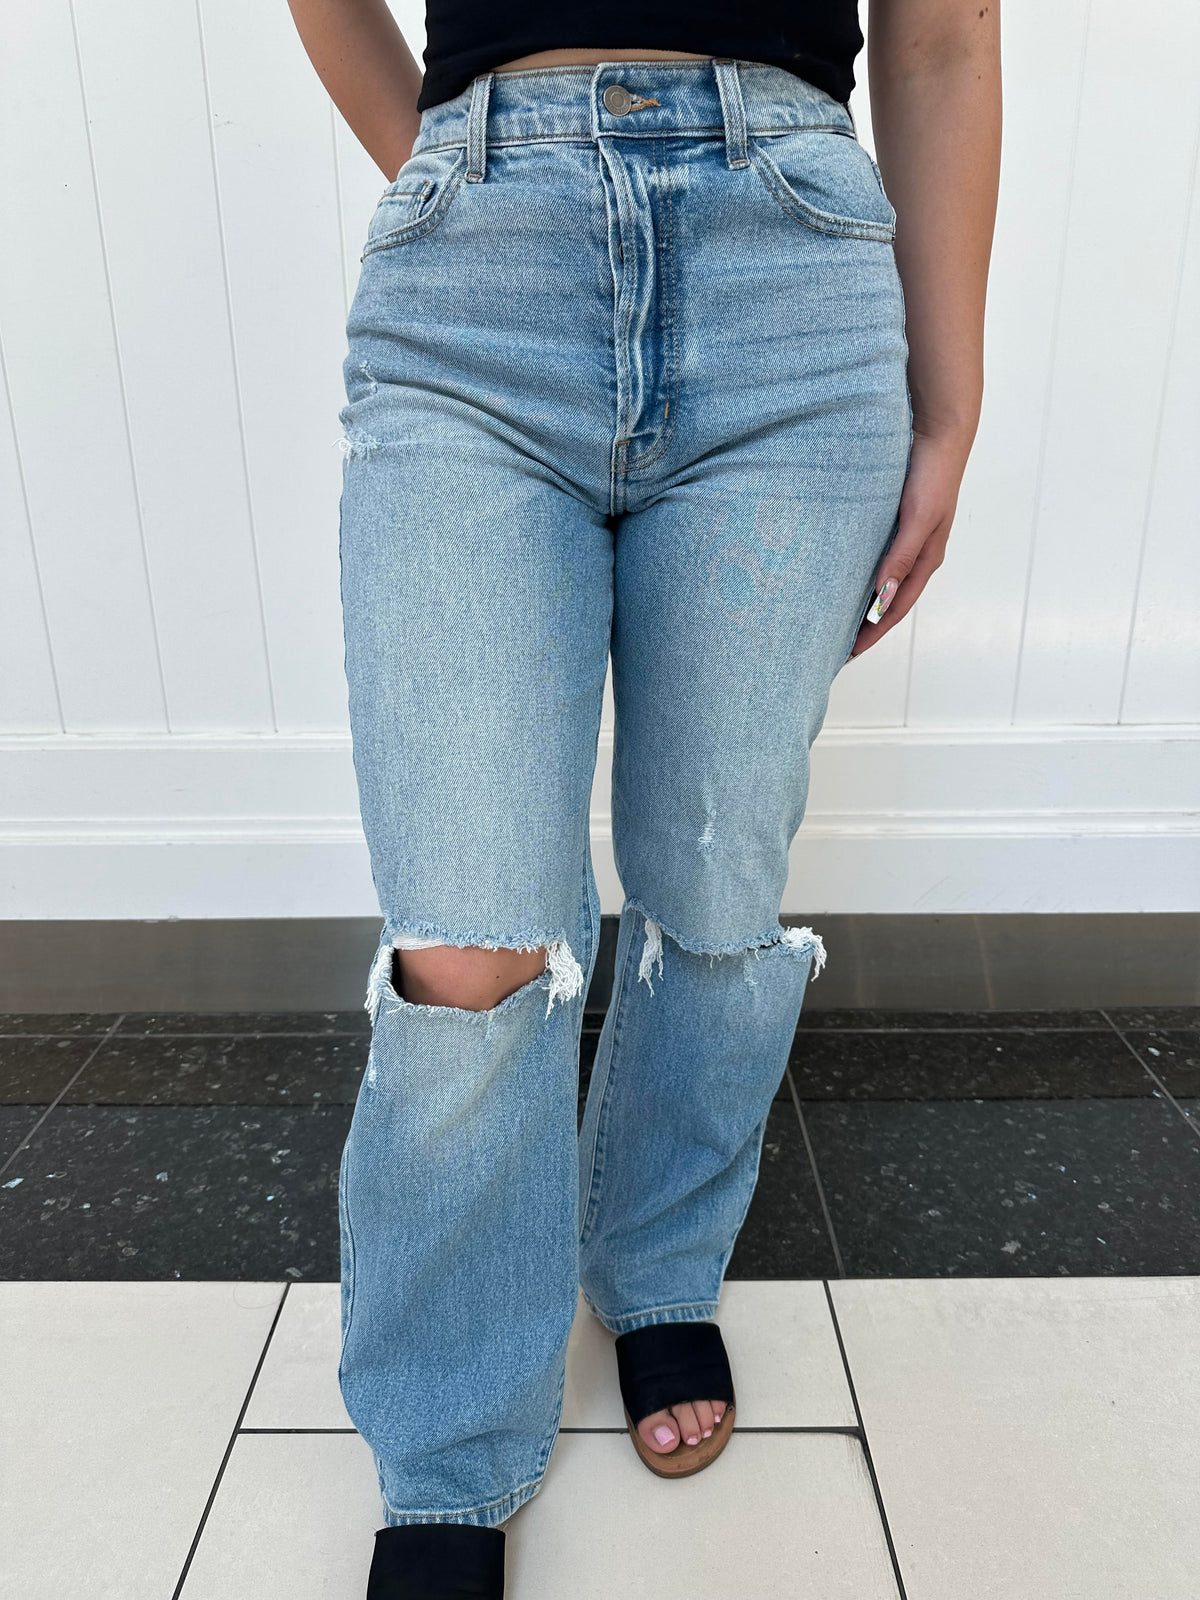 Marbella Distressed Jeans